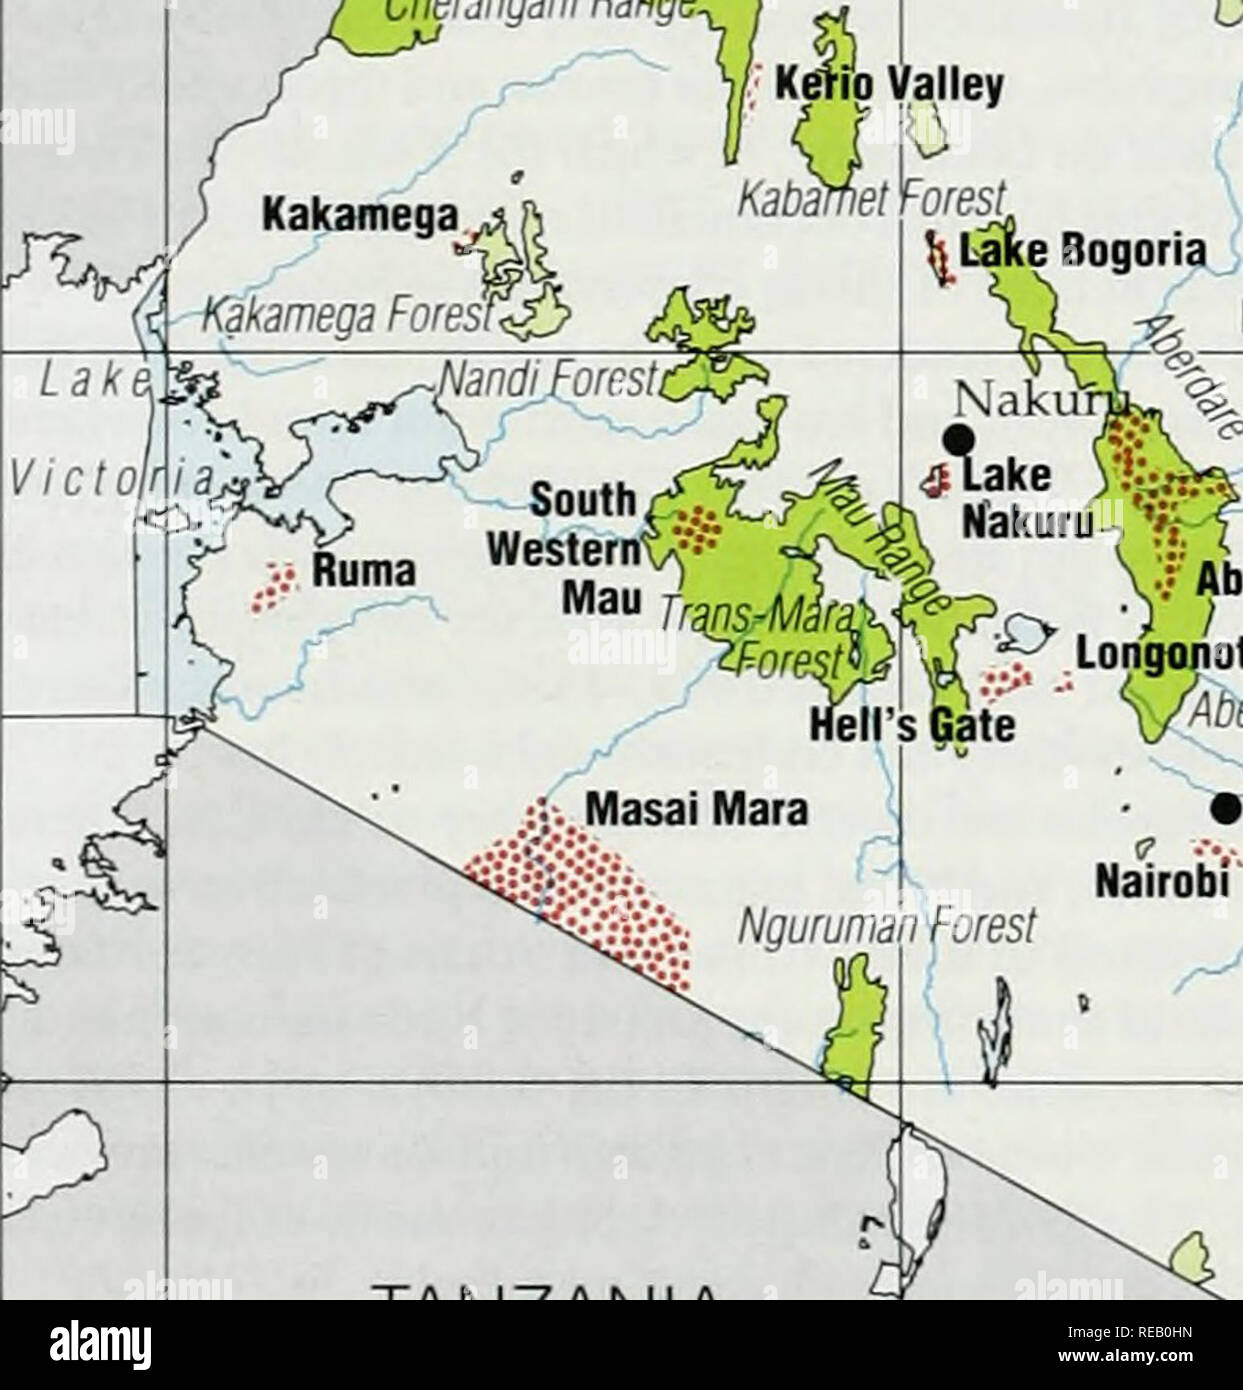 . The Conservation Atlas of Tropical Forests: Africa. 'W UGANDA V Kulal Forest Marsabit 2Â°N â¢.. ^^v'i'vt'-^'&quot;'*'' Turkana :^i. Njsolot , J ^ â â¢â¢â â¢â Mount Elgon (4321m)/^â¢â â¢â ^ Saiwa Swamp ' Cherangani Raifge^ bamel ,/Vrfotos Forest Valley ^'^&quot;^i^iosai Lerogtii Forest Maralai''':V? iMattiews Fdrest. SOMALIA Valley ^ Sambur^.^ ,^;.shaba -oresi Buffalo Spcings Ij^taJteBogoria Zp.-.vVSJsanadr:-':.:.-. Ra Rahole ?(5200ra) â¢ 4^?- ^rt, u^ L ' '.- /- v*-&gt;.,^-v -* North Kitui-;:^- Kora - ...ruma Westernt^-- ^^ W3U TrmMraXC'^p.c-y â )' ) I&quot;&quot;** HeM'sGate &quot; Sy^betda Stock Photo